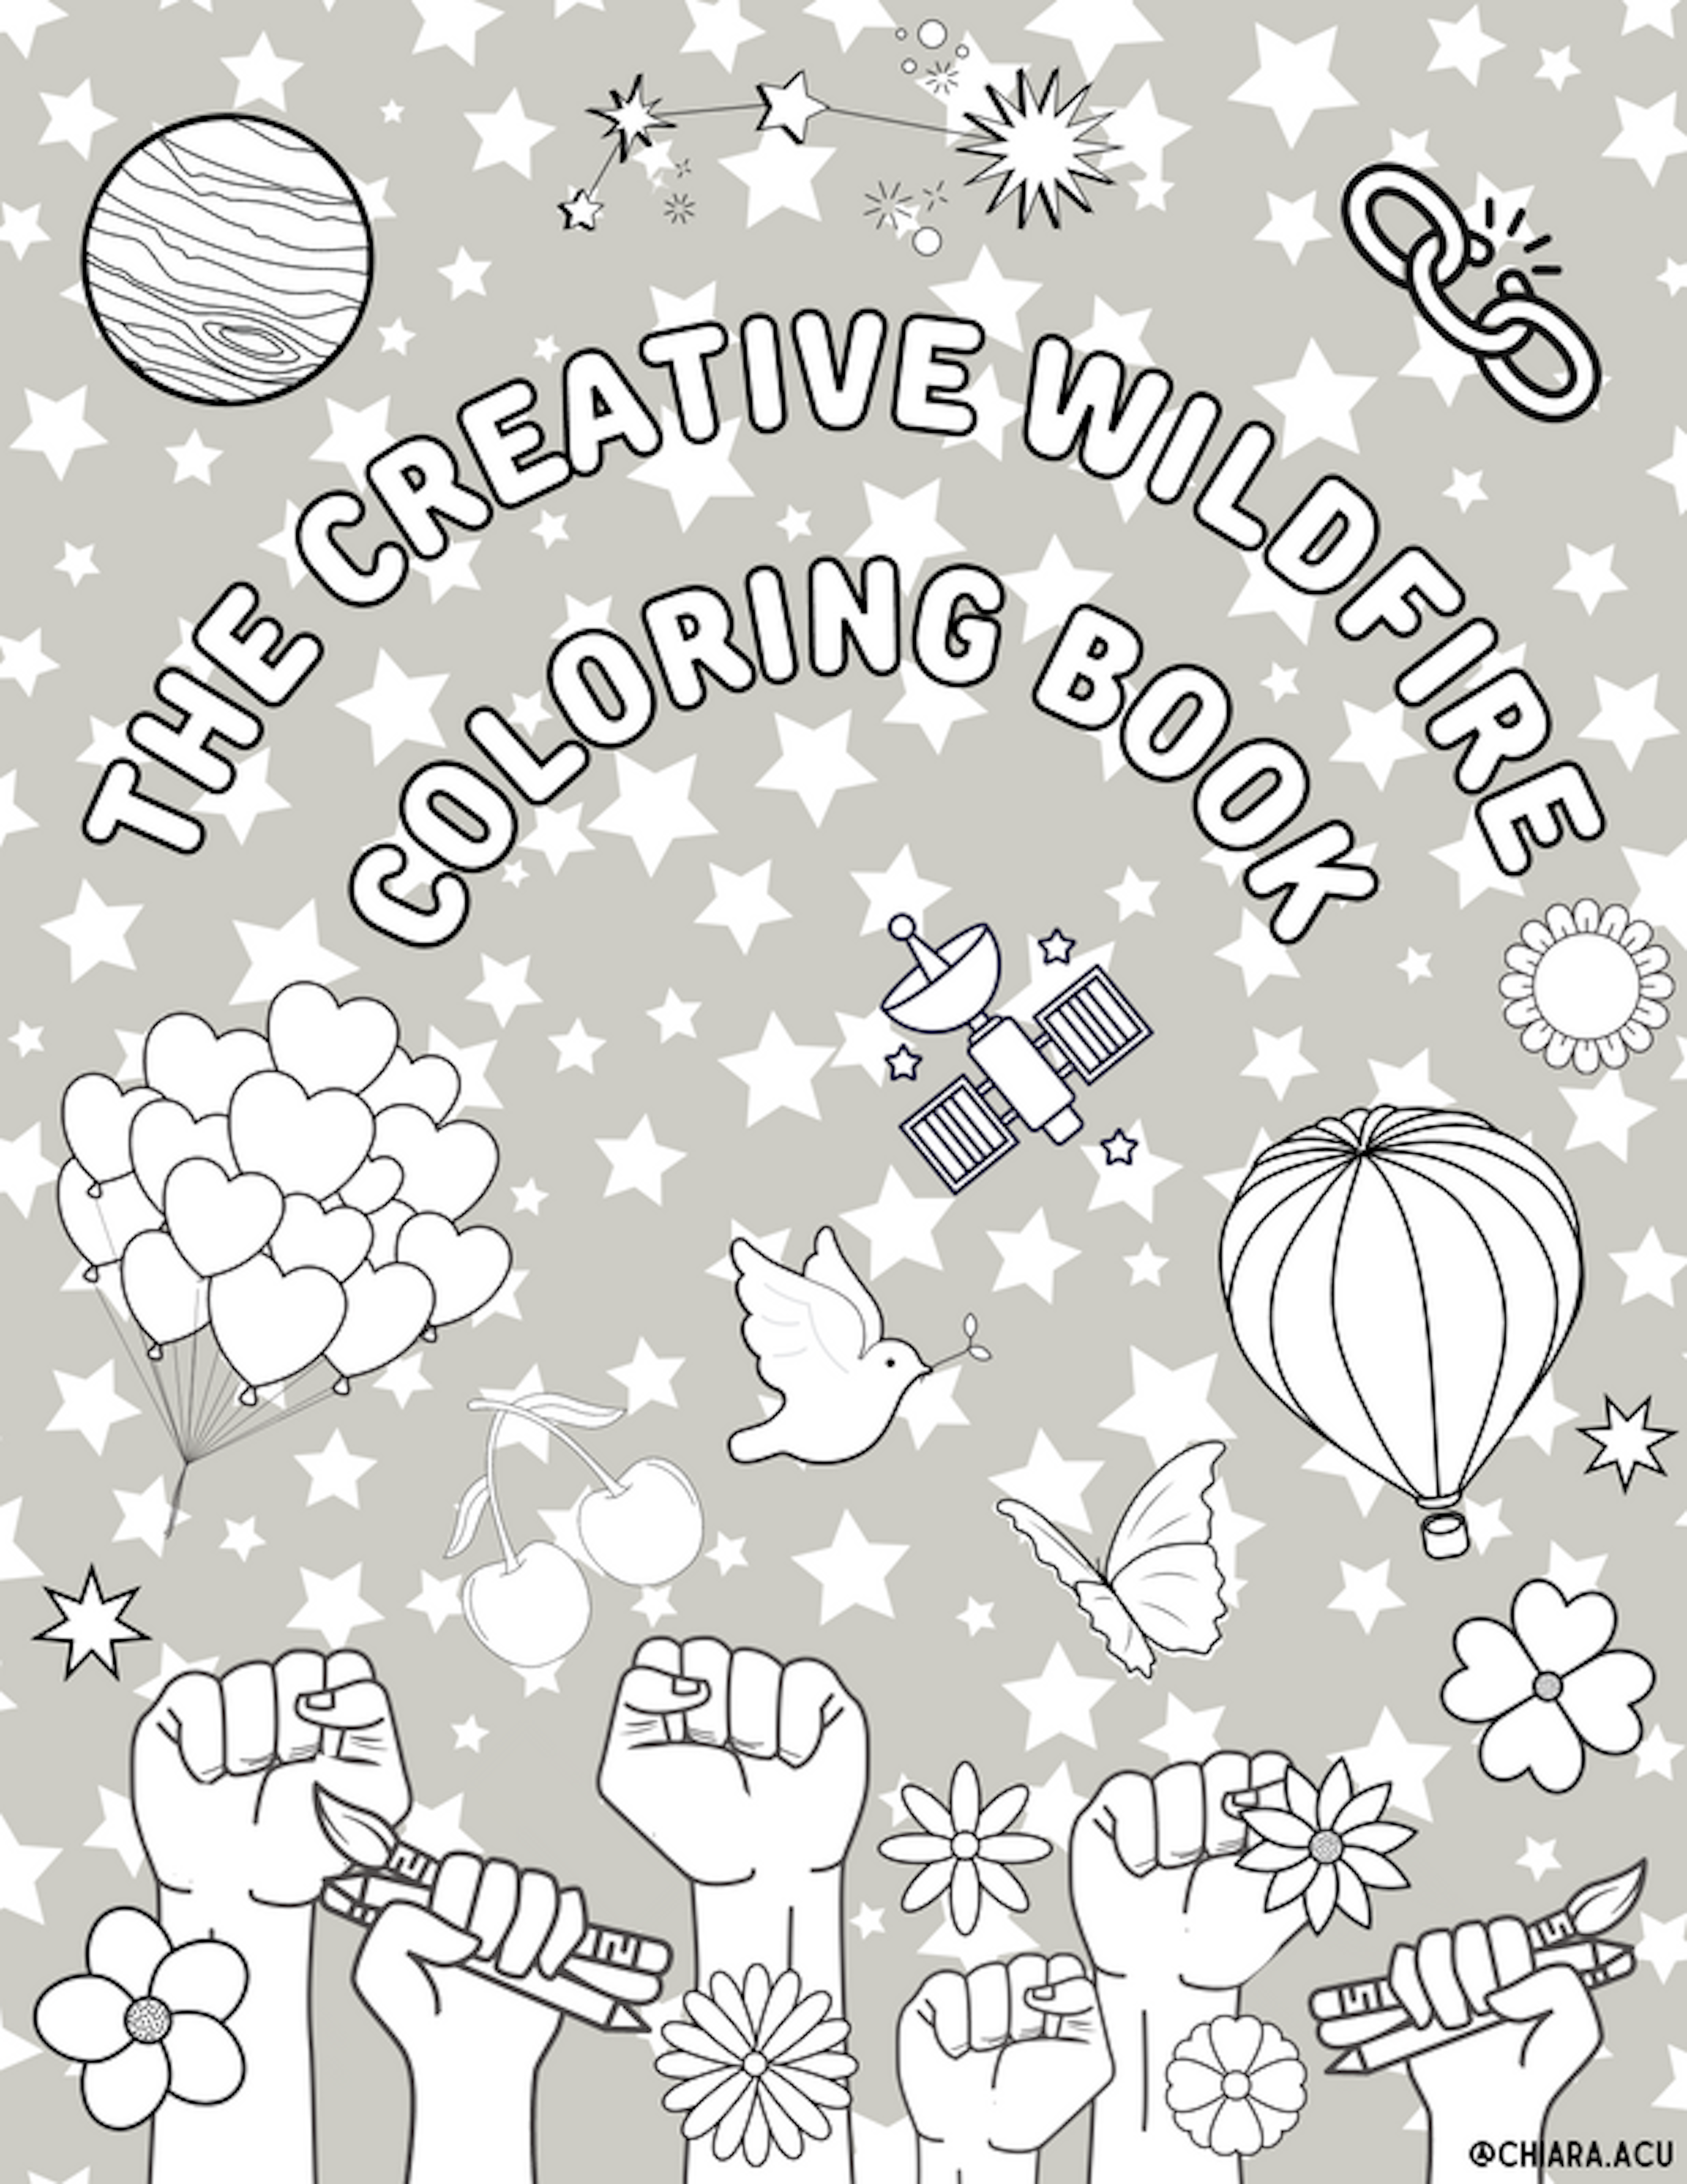 Creative Wildfire Coloring Book